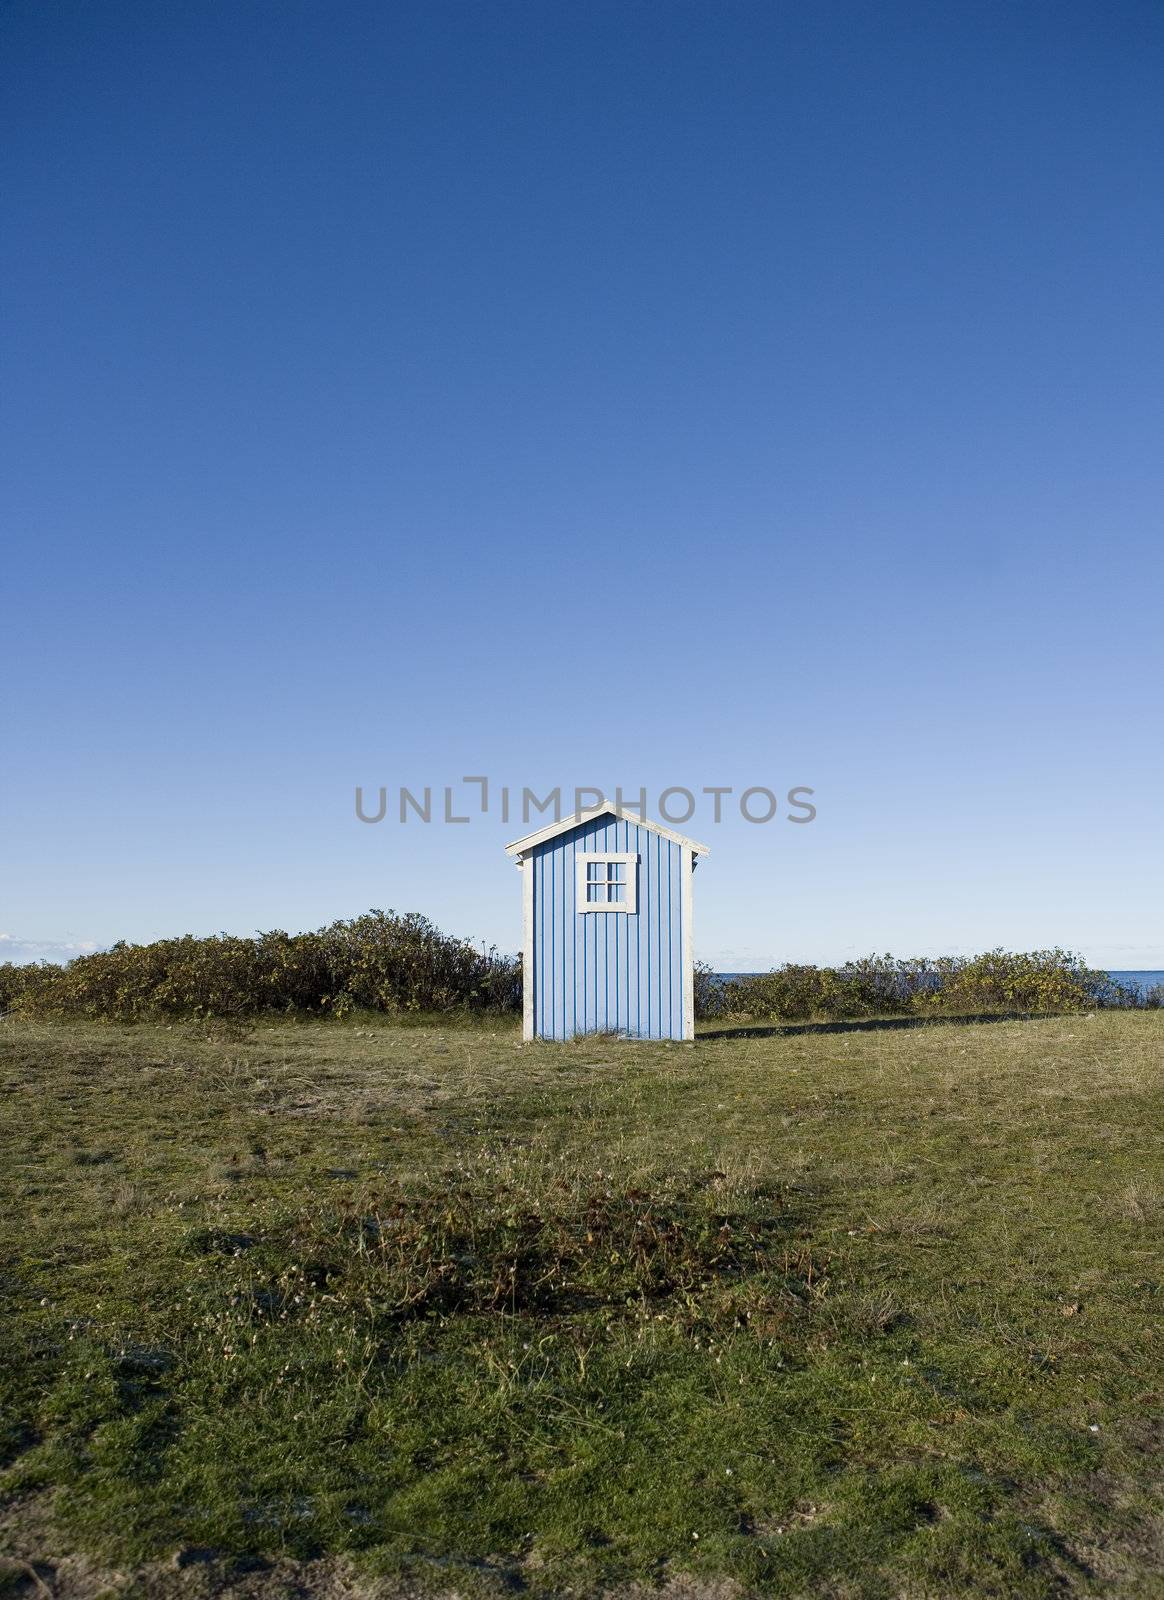 Single boathouse on a sunny day